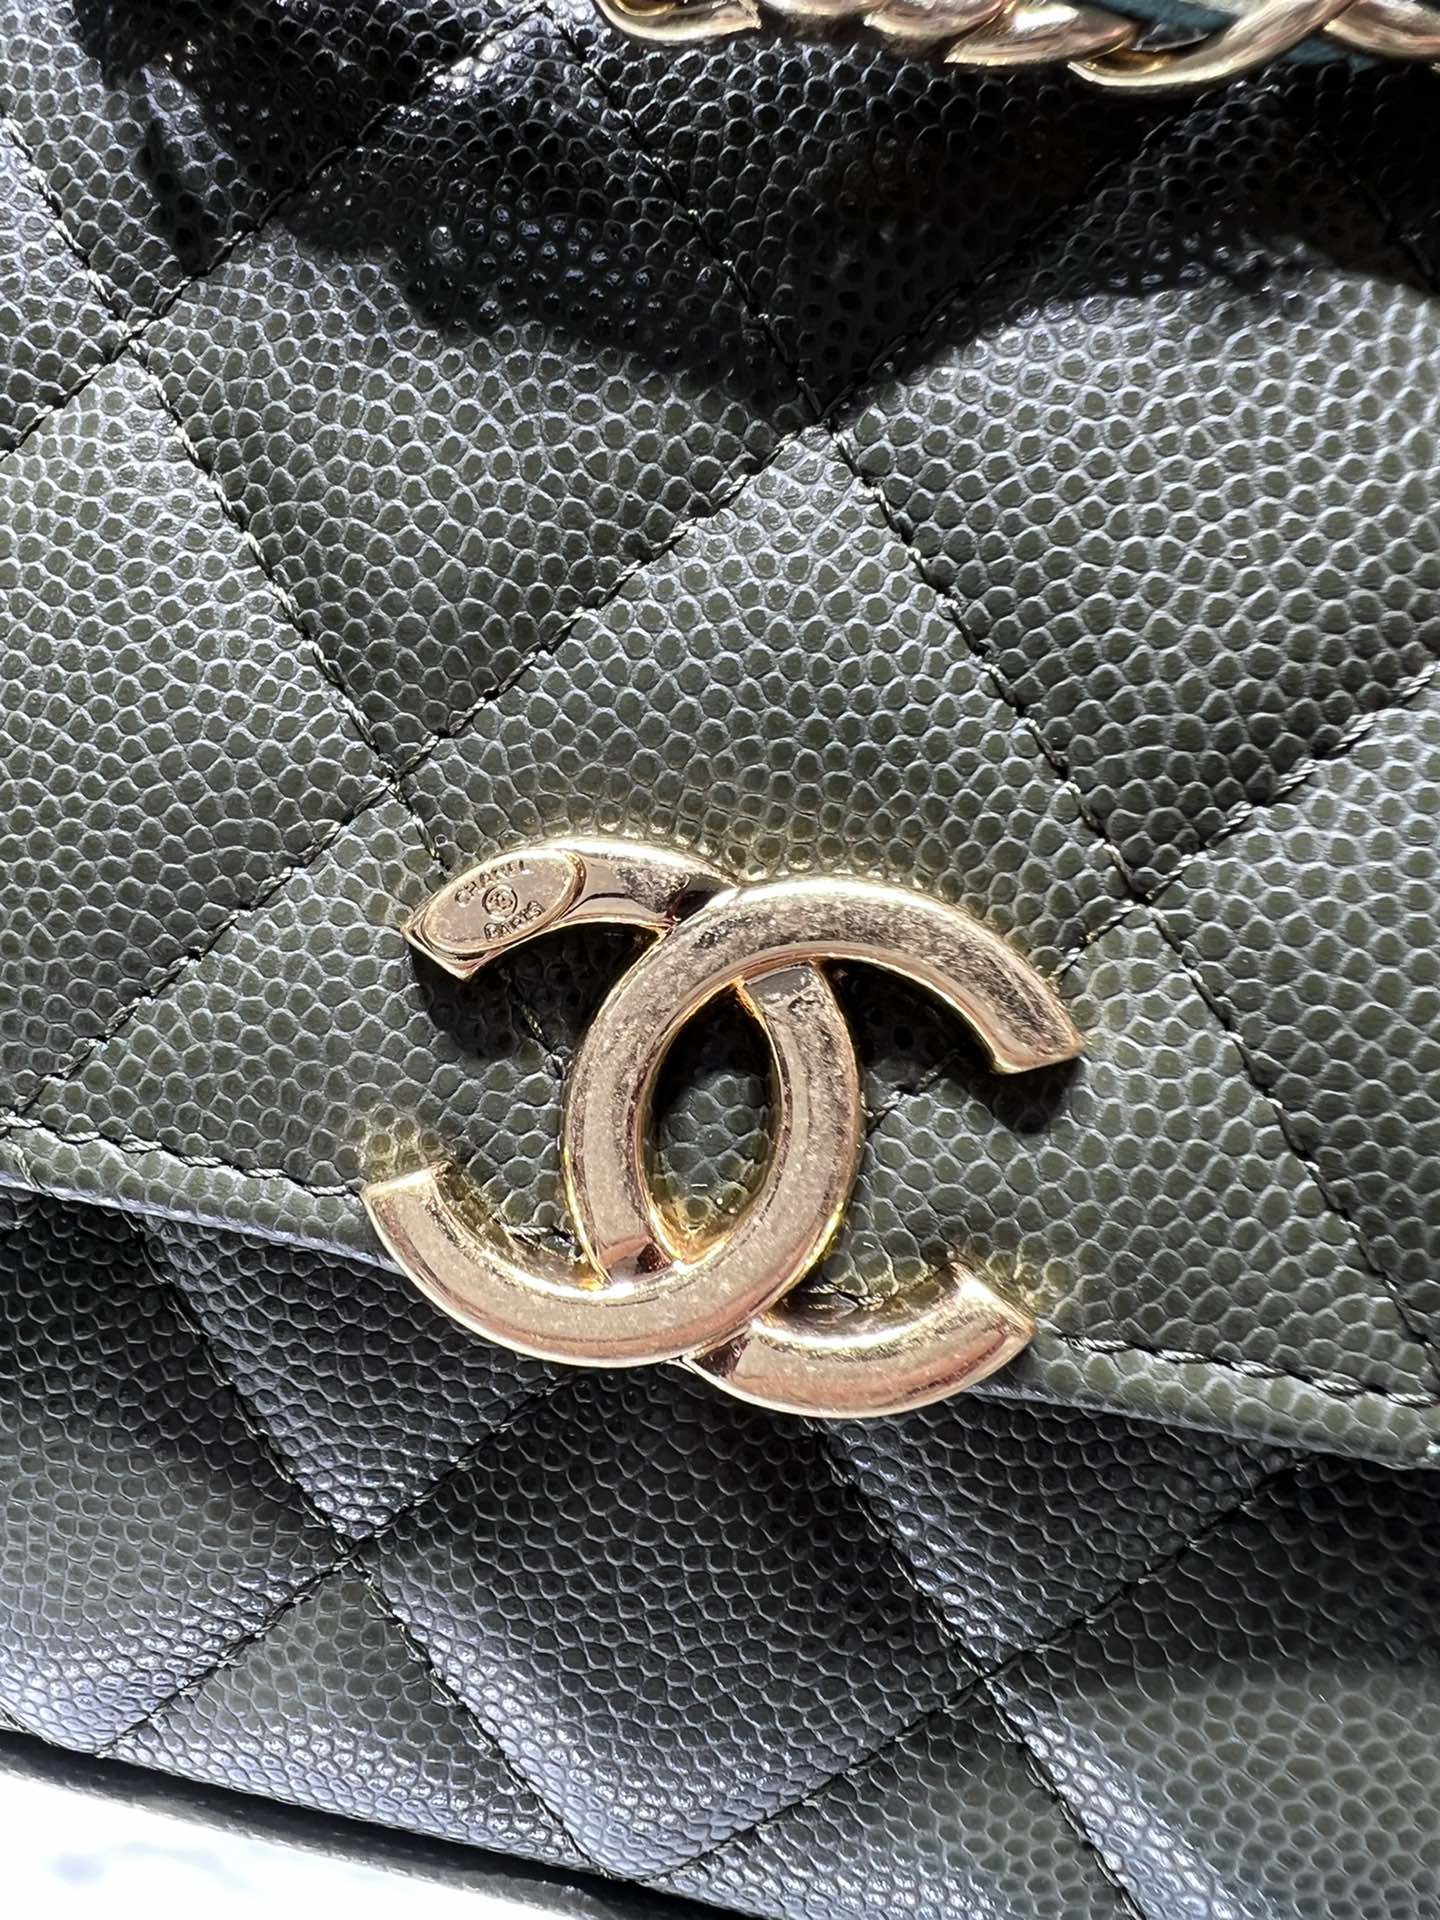 【P1170】香奈儿包包货源 Chanel 进口鱼子酱皮22K双链零钱包链条包 绿色